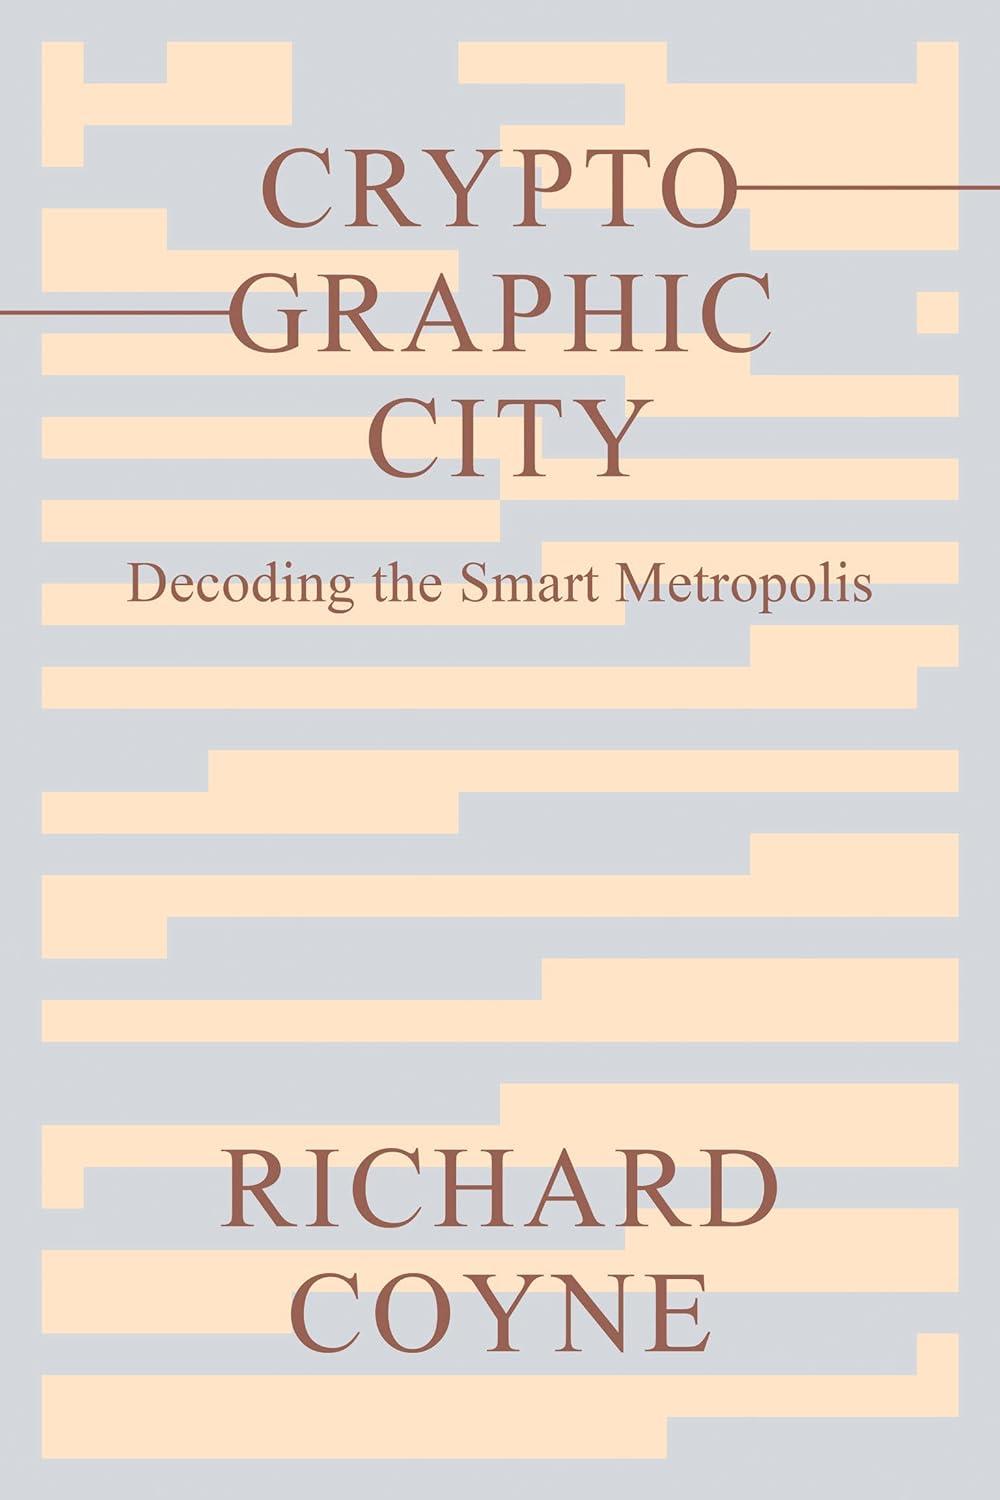 cryptographic city decoding the smart metropolis 1st edition richard coyne 0262545675, 978-0262545679